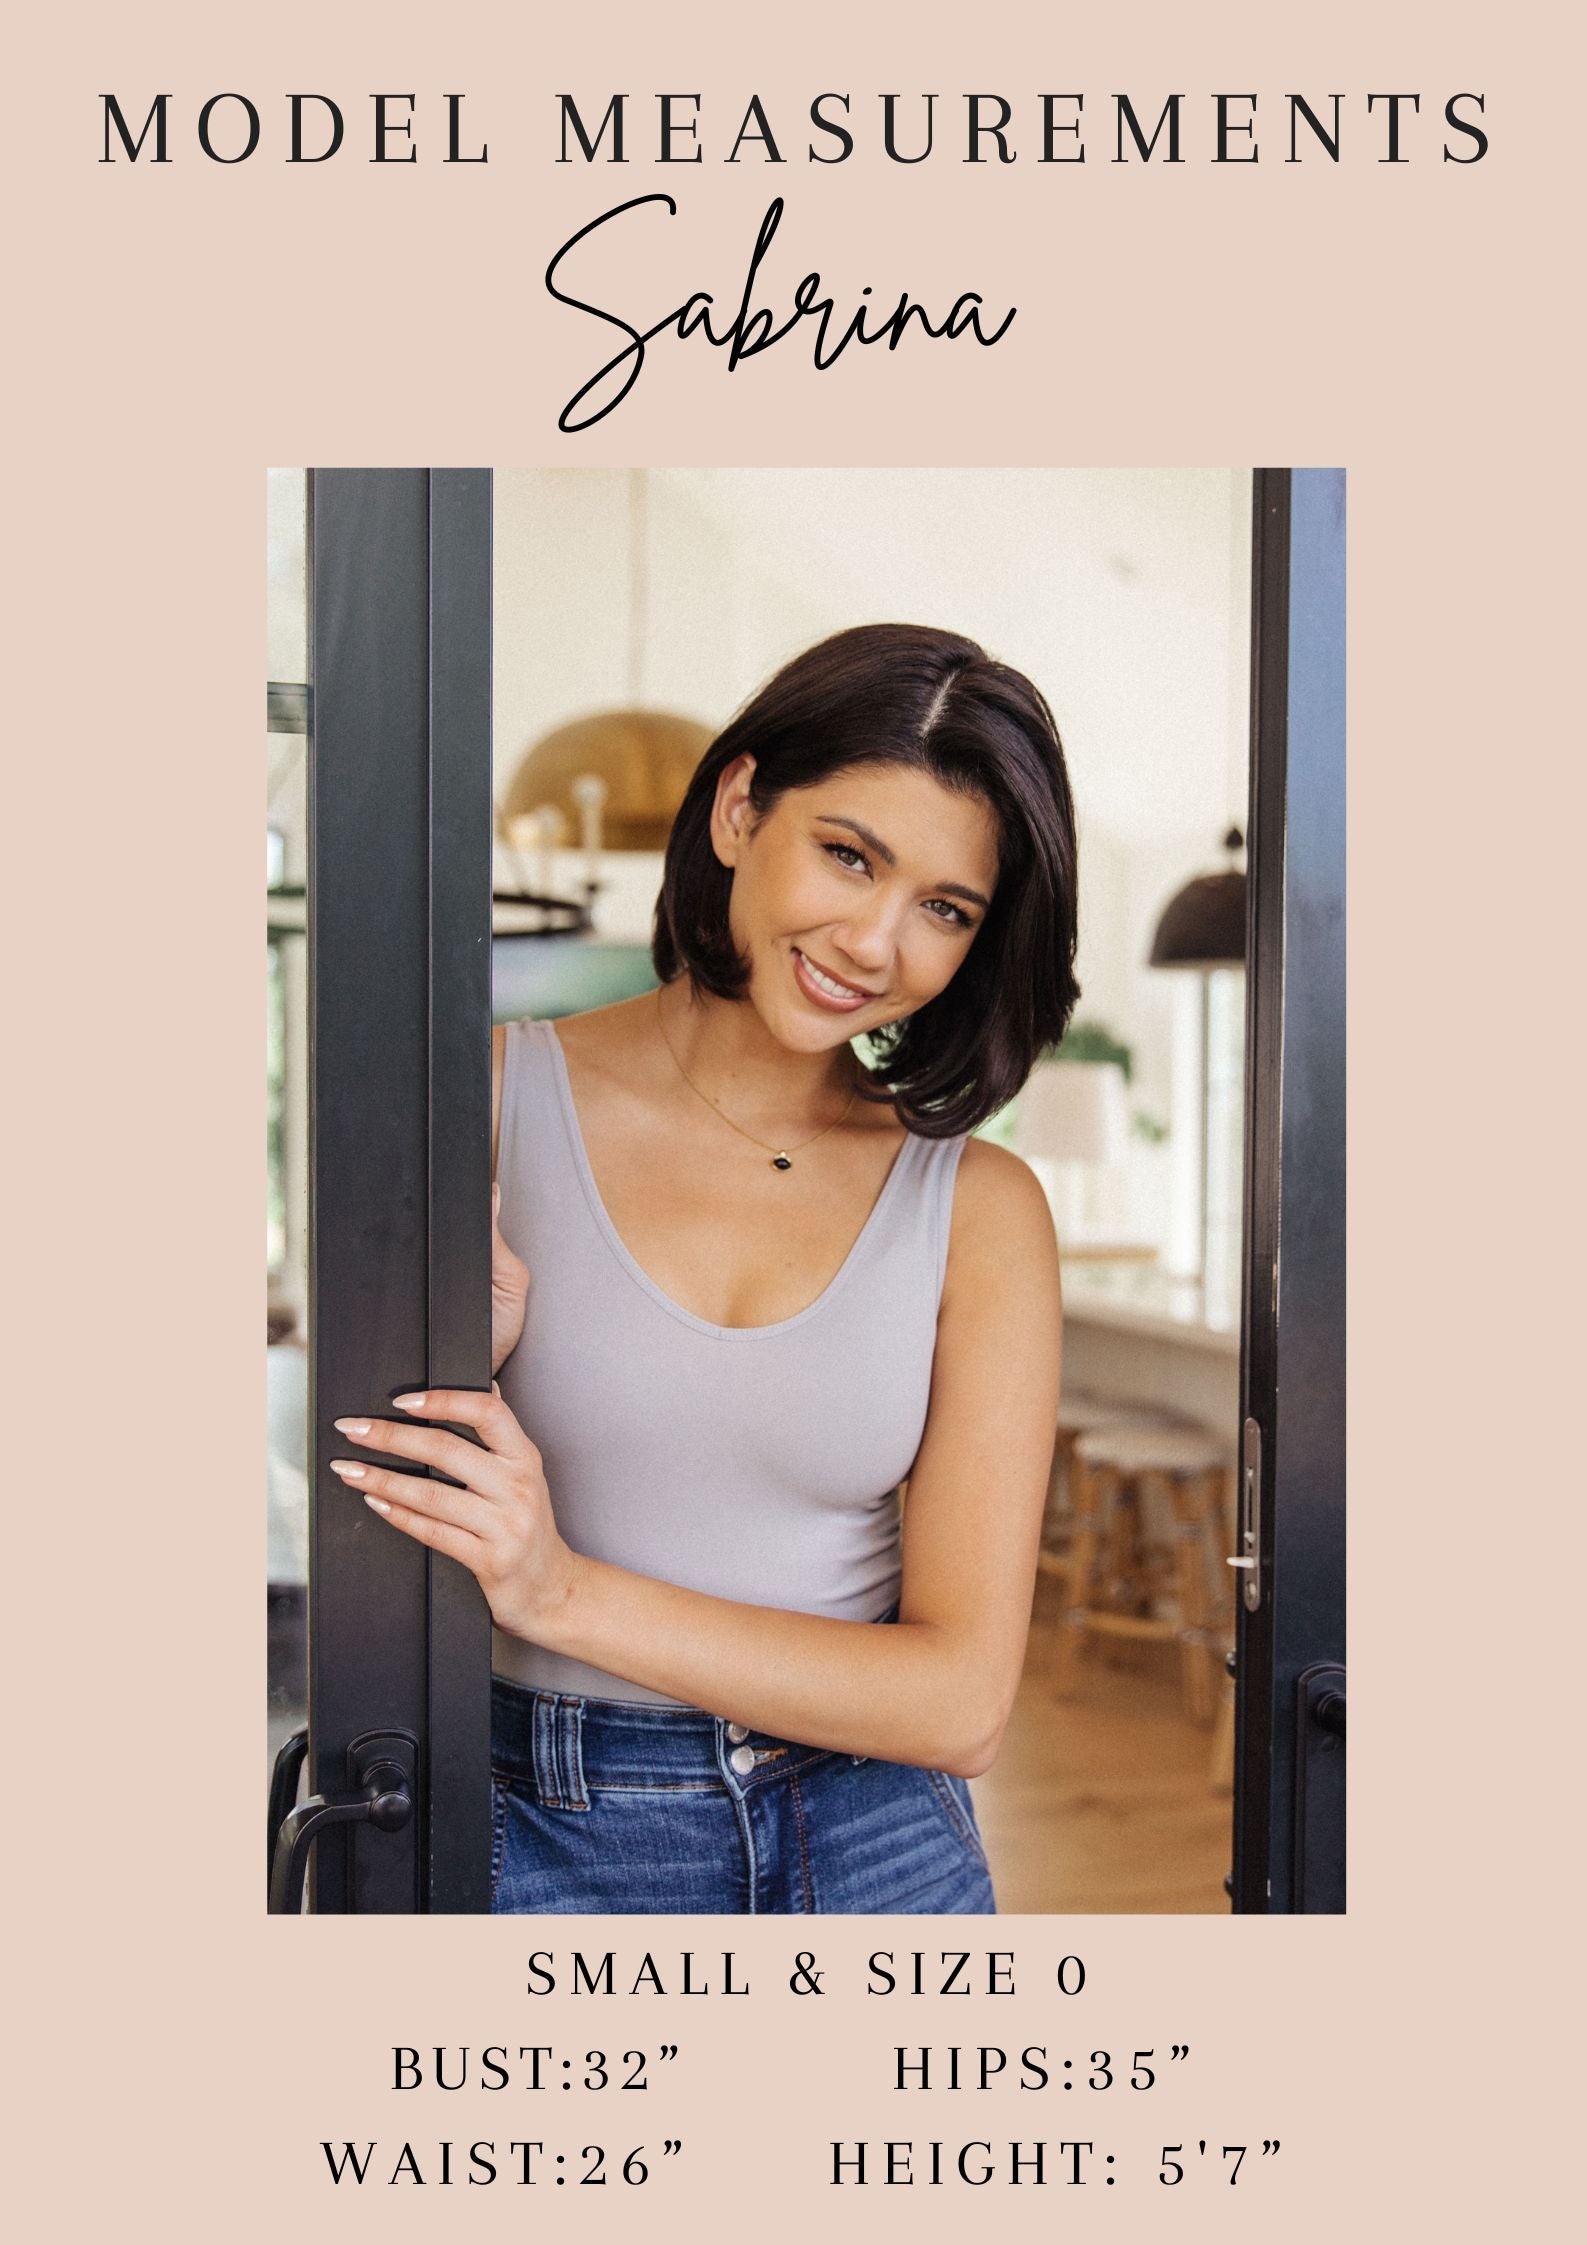 JUDY BLUE London Midrise Boyfriend Jeans-Jeans-Krush Kandy, Women's Online Fashion Boutique Located in Phoenix, Arizona (Scottsdale Area)